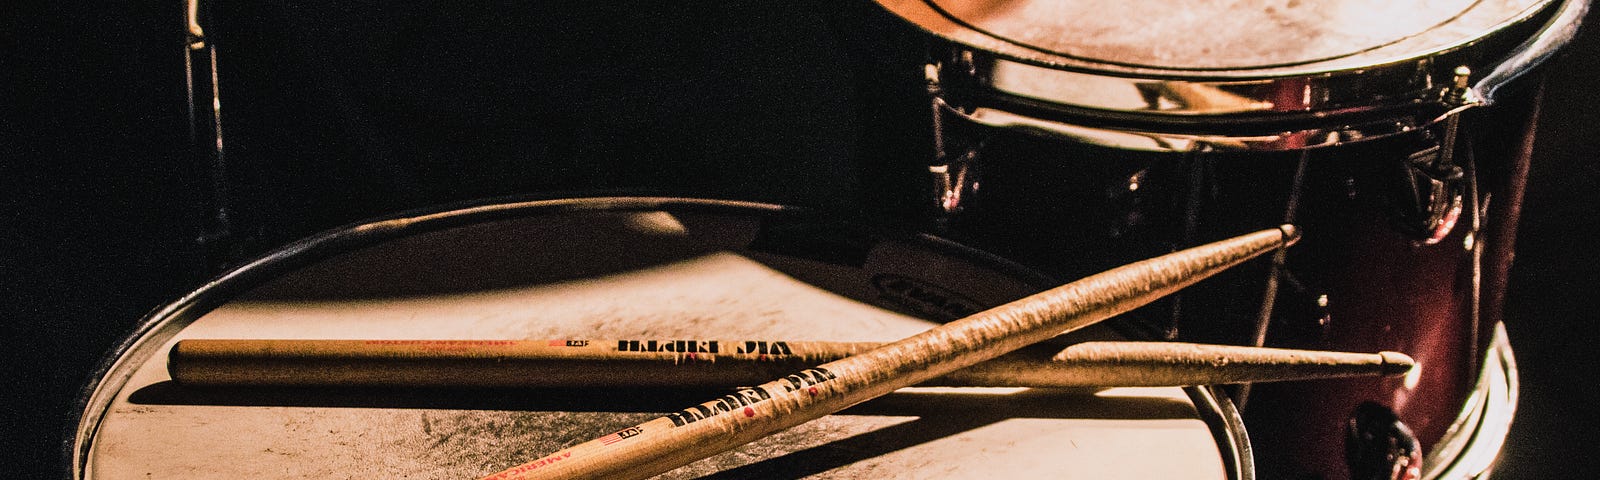 Drumset with drumsticks